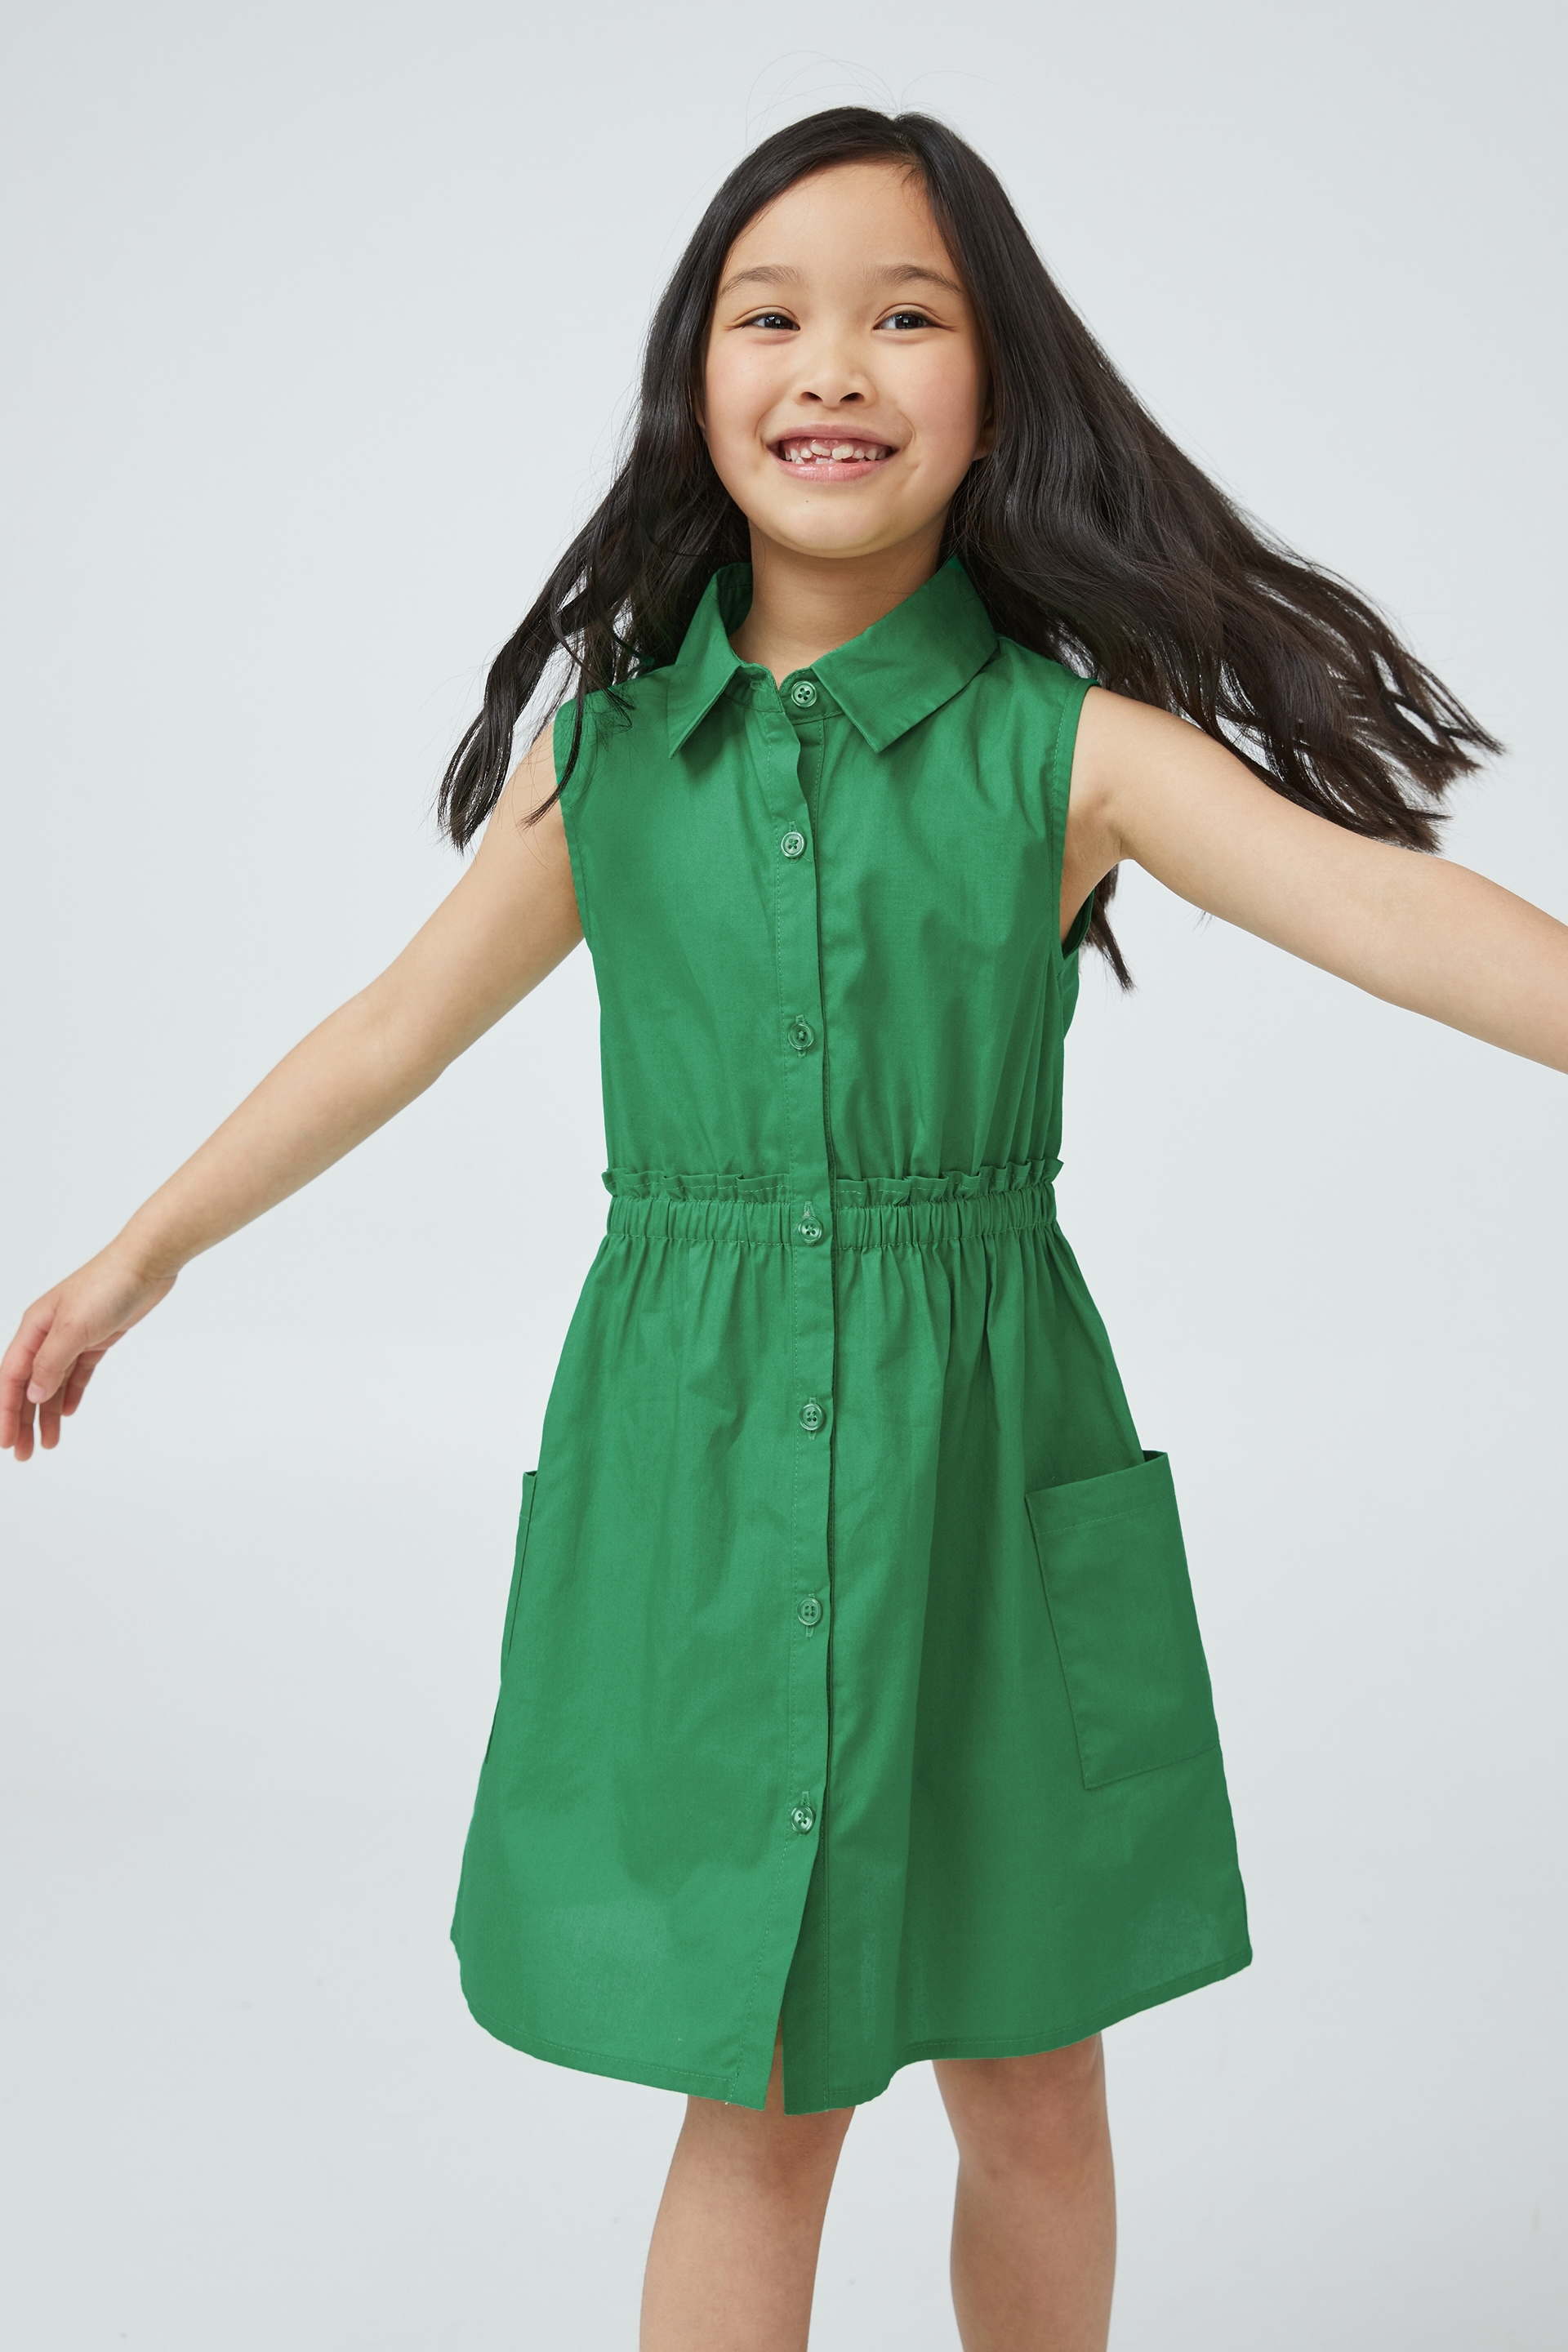 Cotton On Kids - Simone Sleeveless Dress - Toffee apple